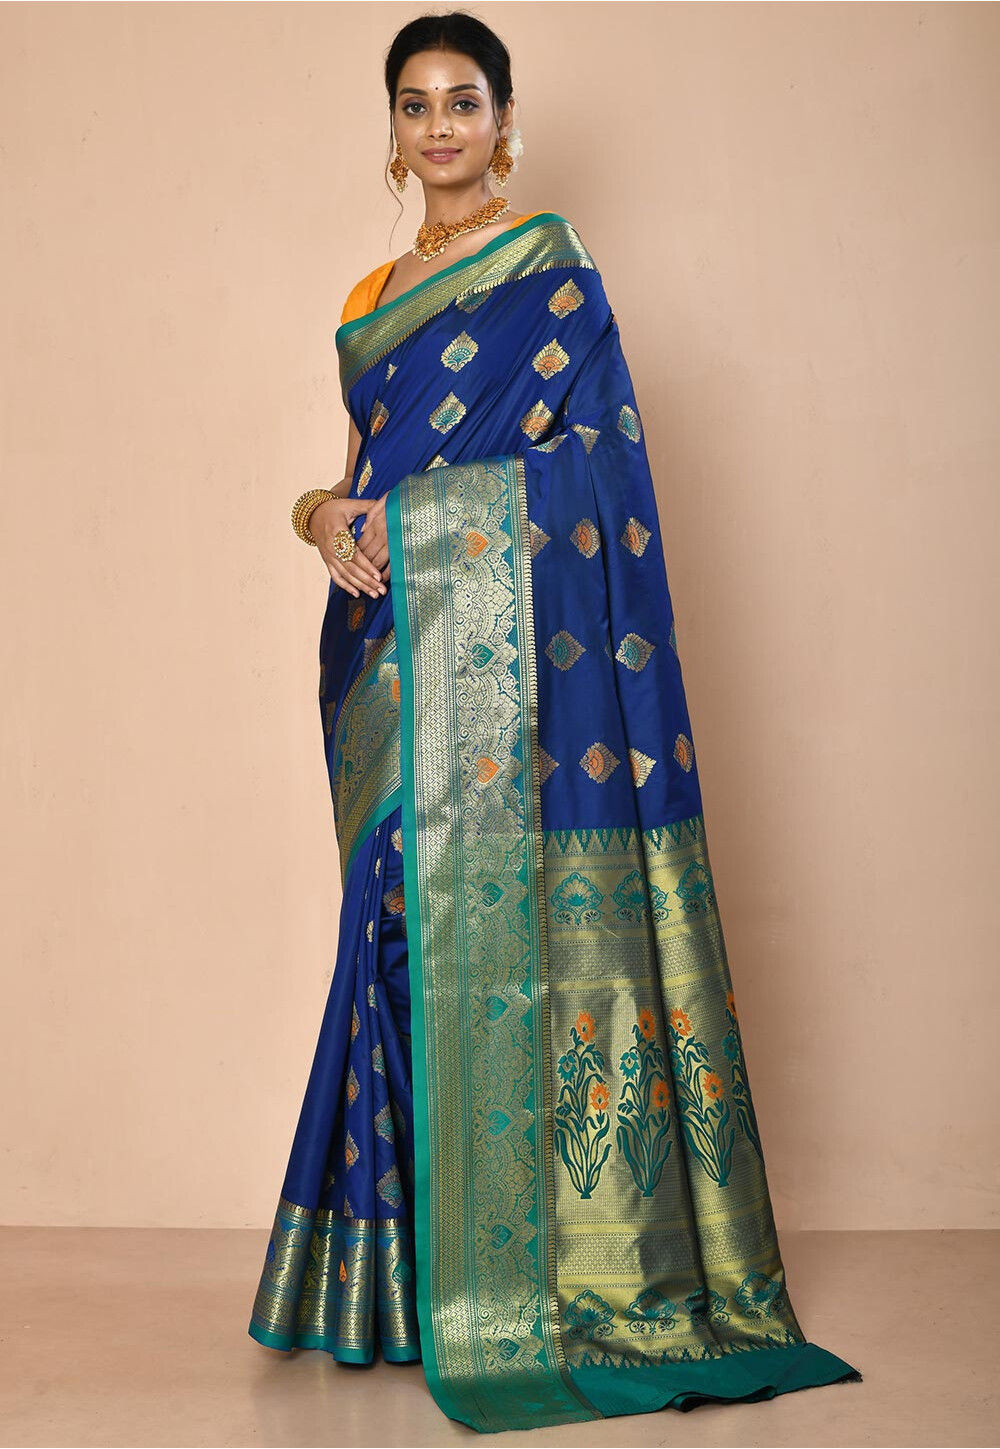 Best Kanchipuram Silk Traditional saree in Blue dvz0002635 